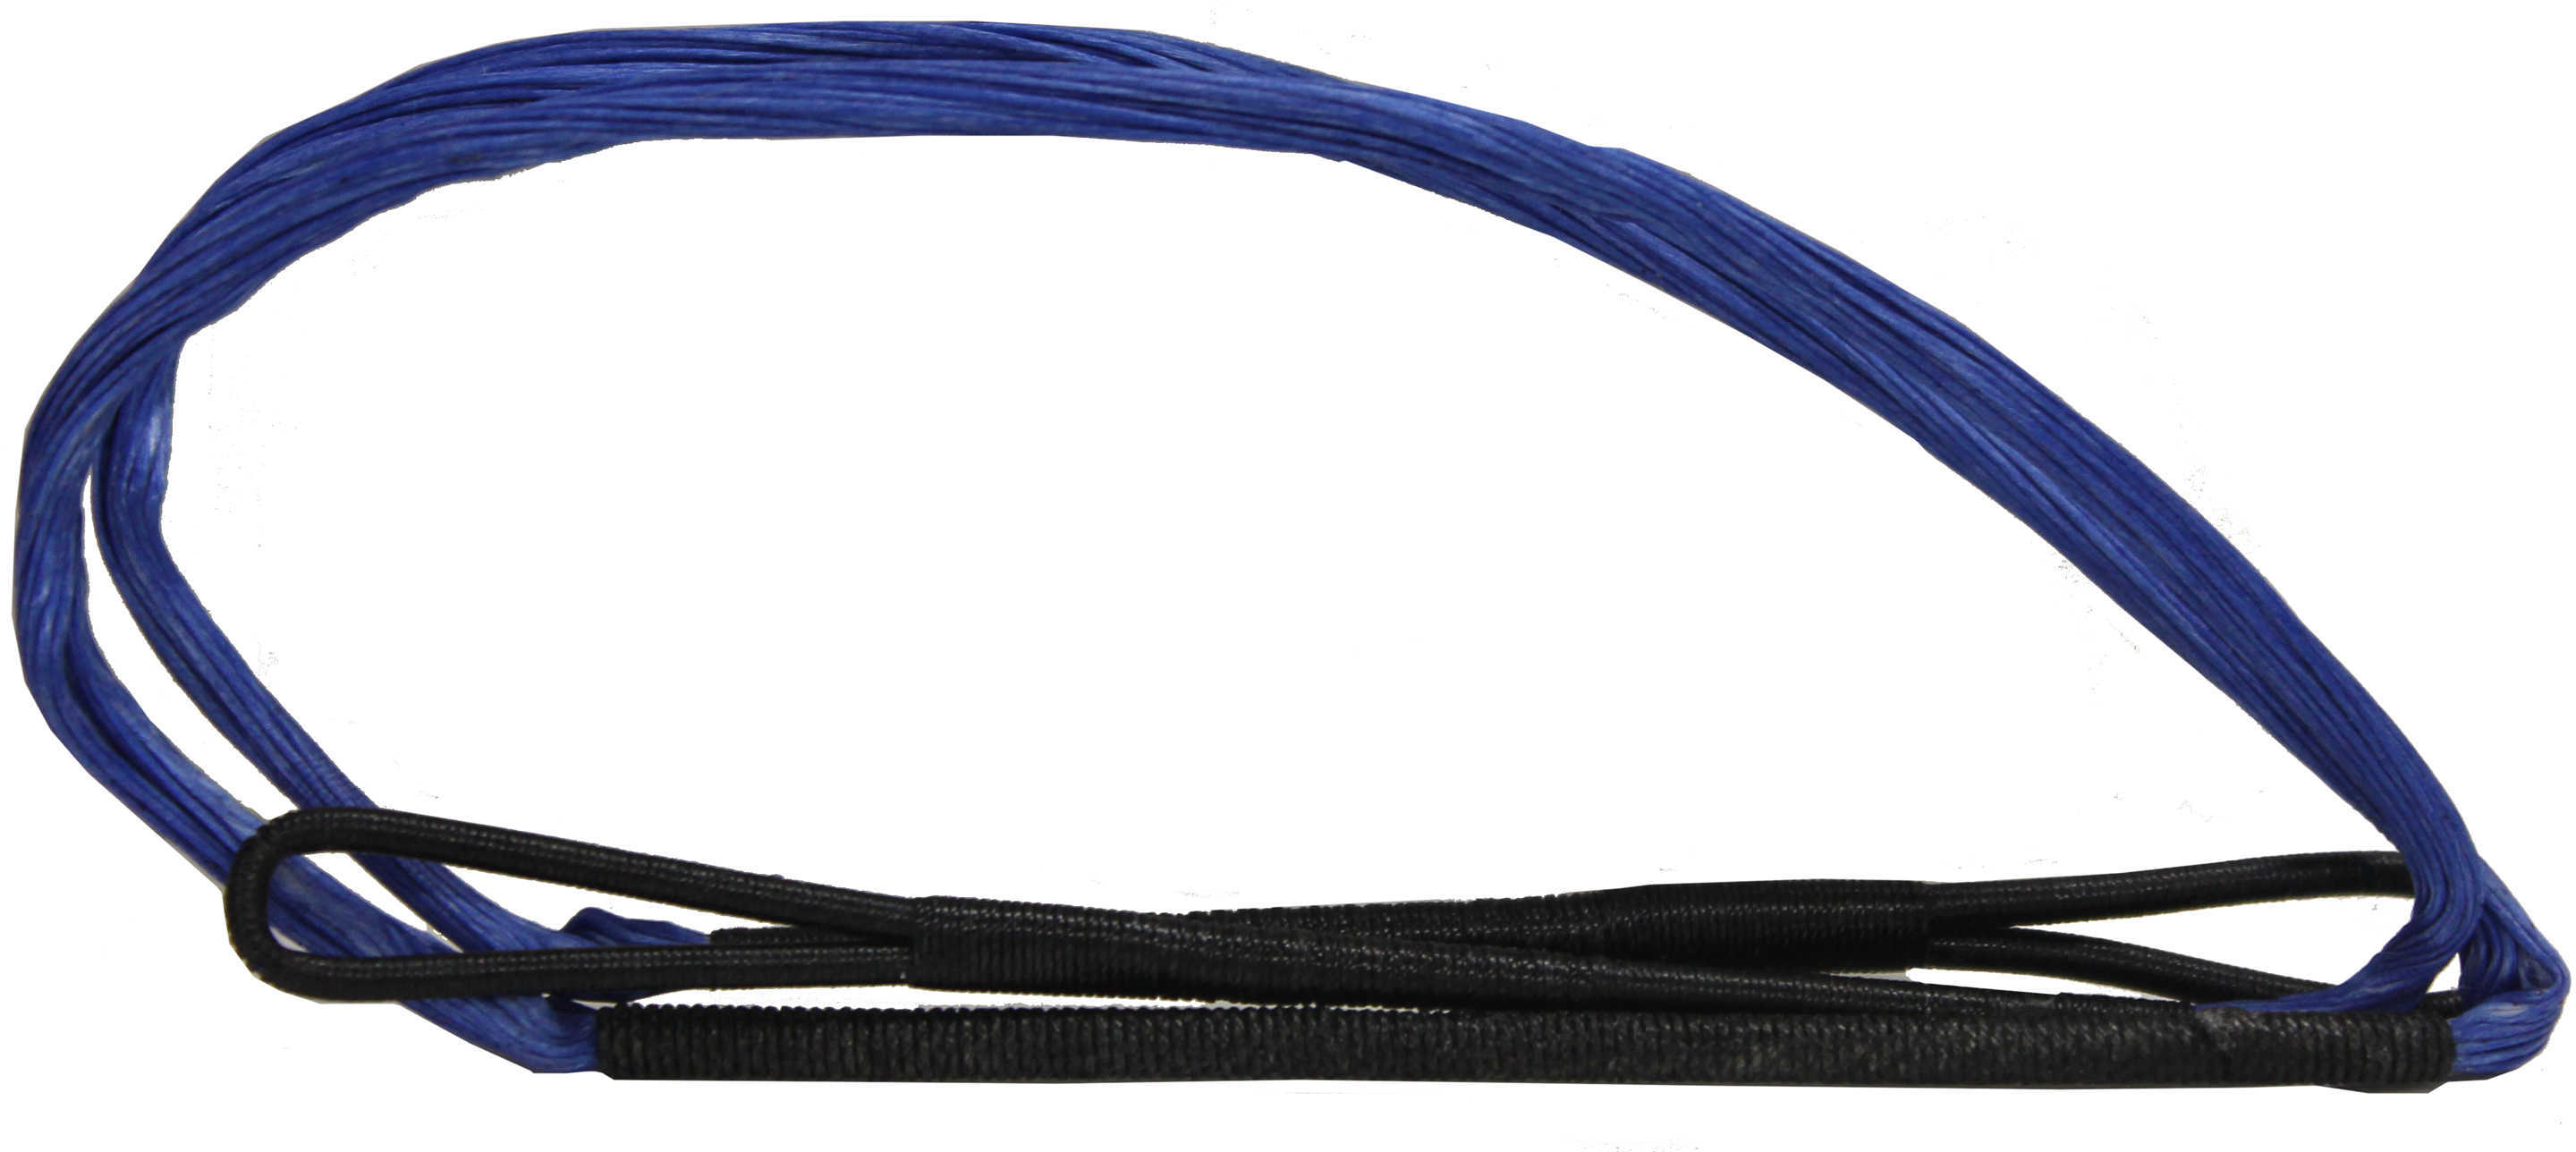 Excalibur Matrix Crossbow String Stingray Blue